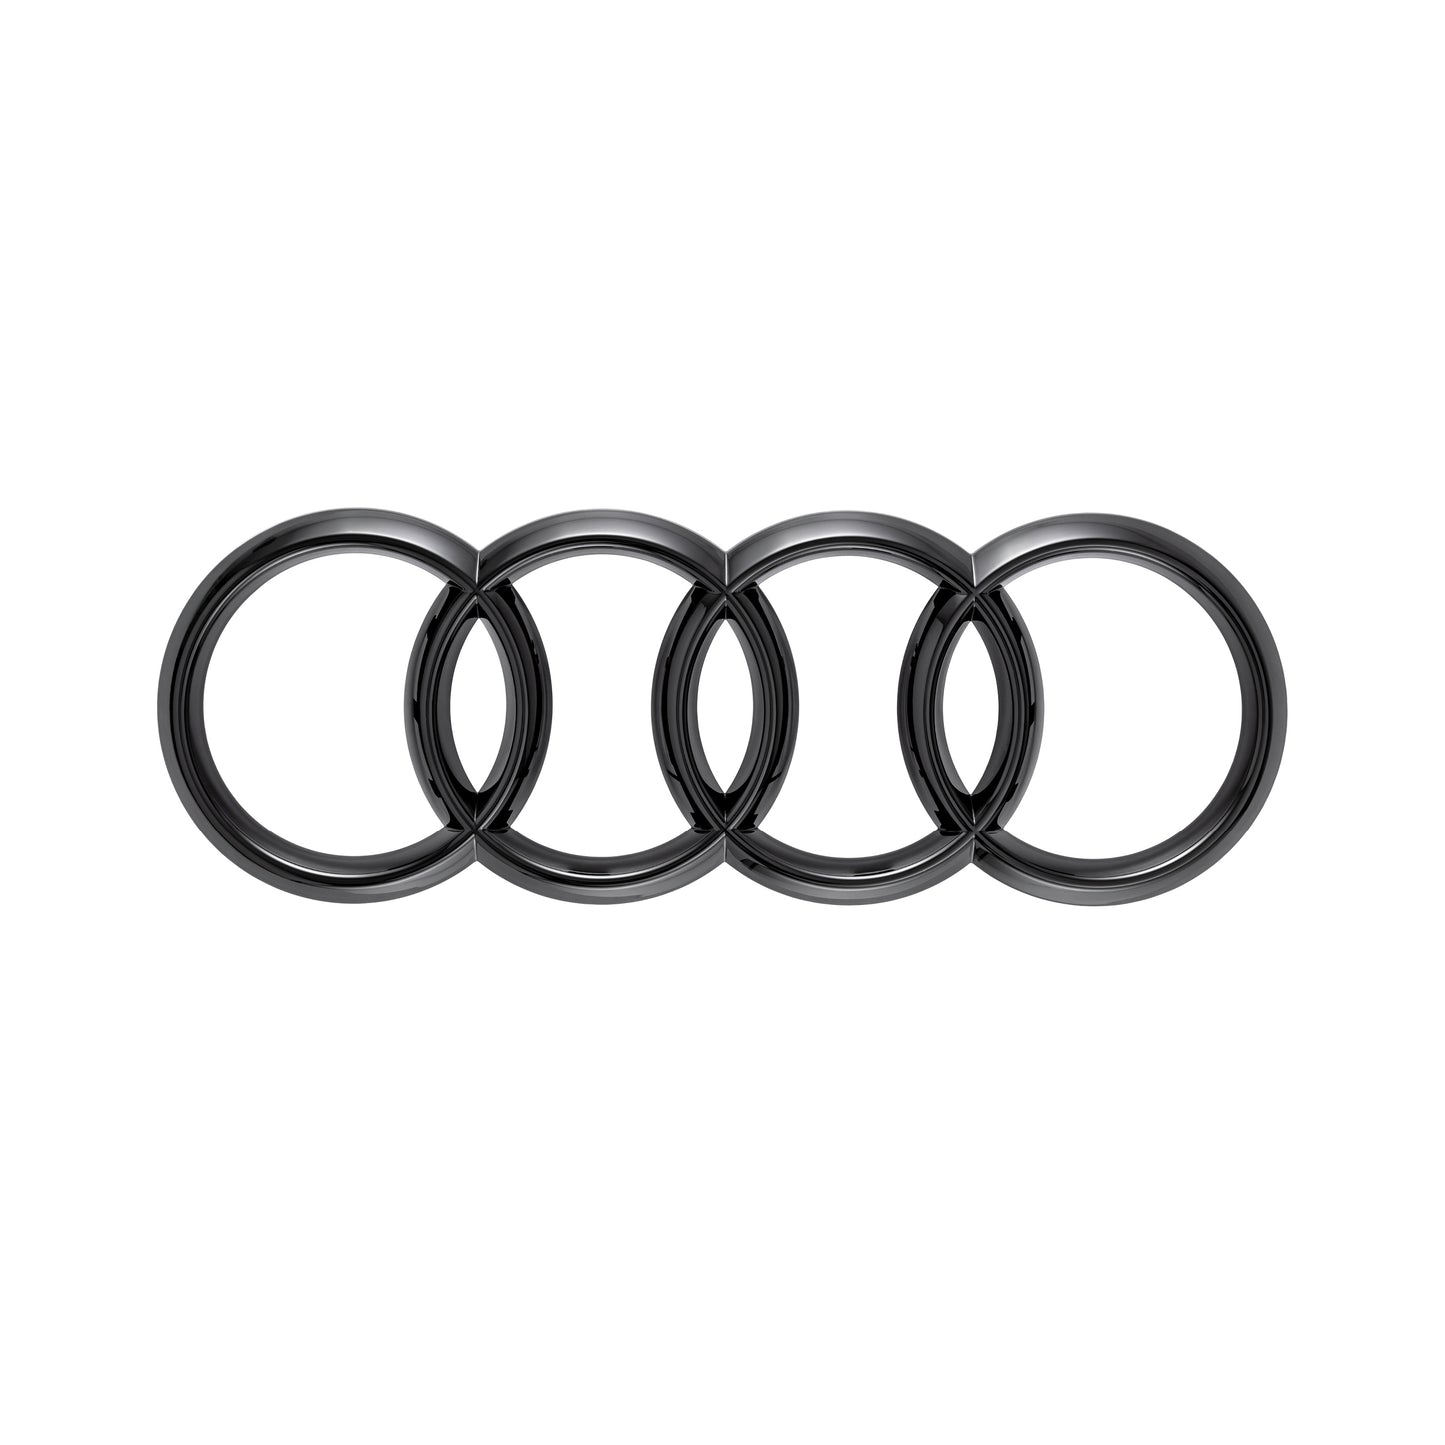 Audi rings, front. Black